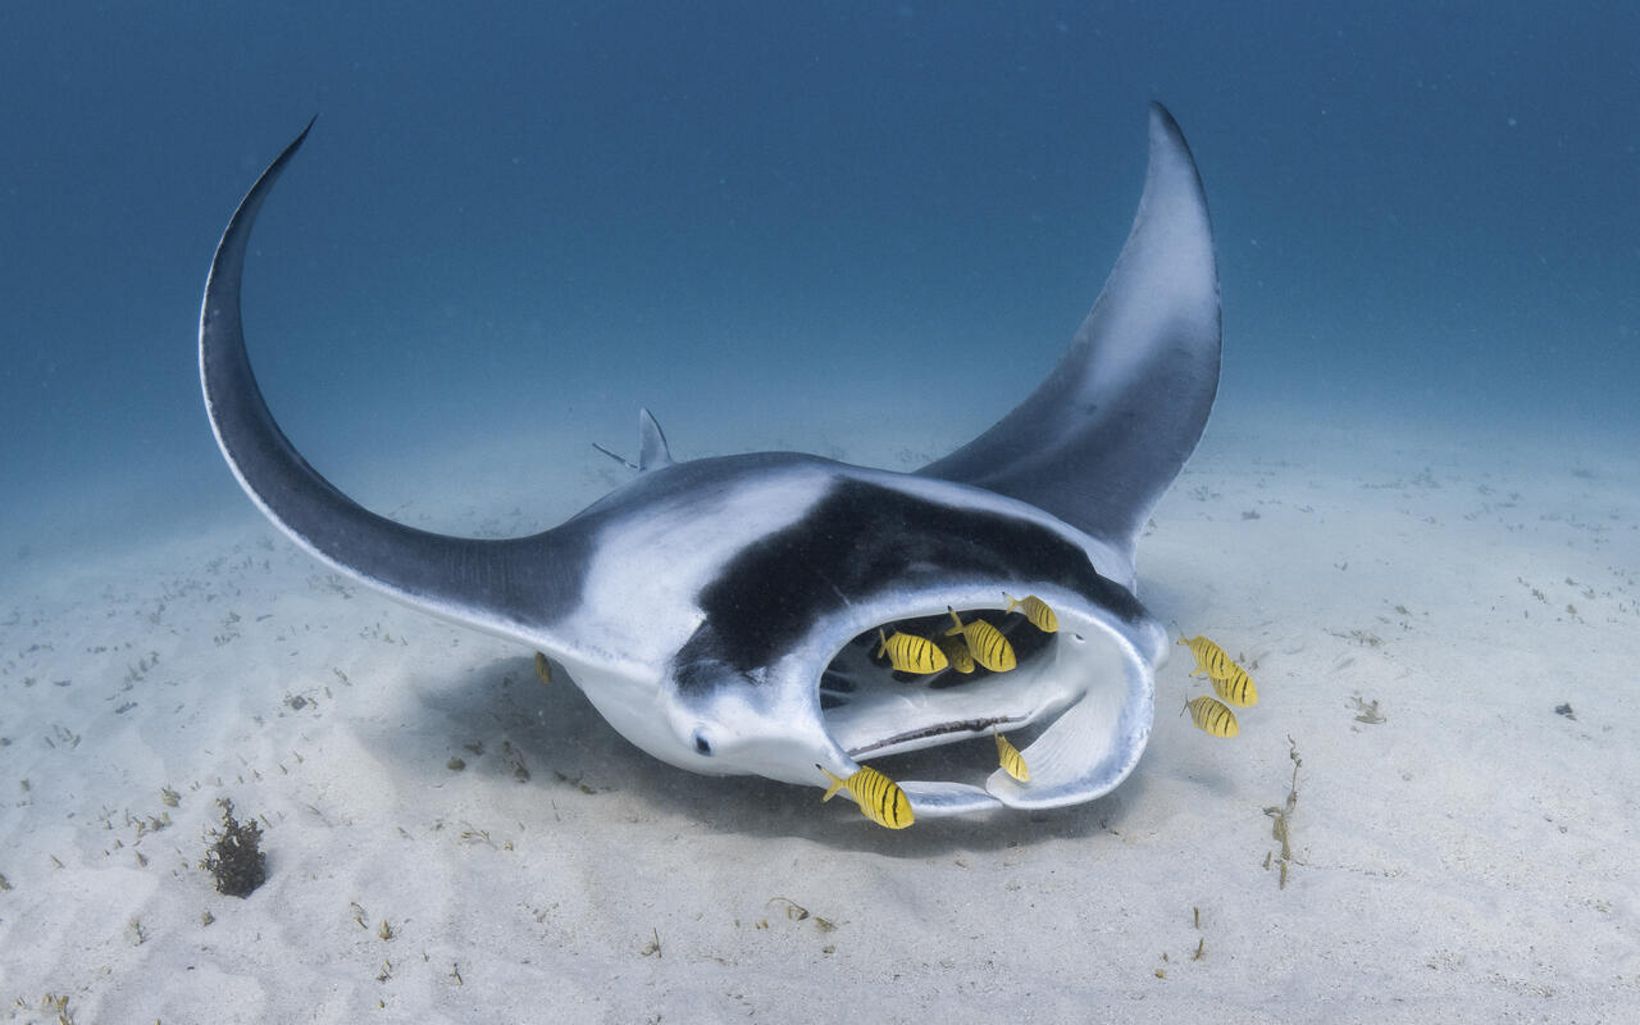 A manta ray feeds along the sandy bottoms.